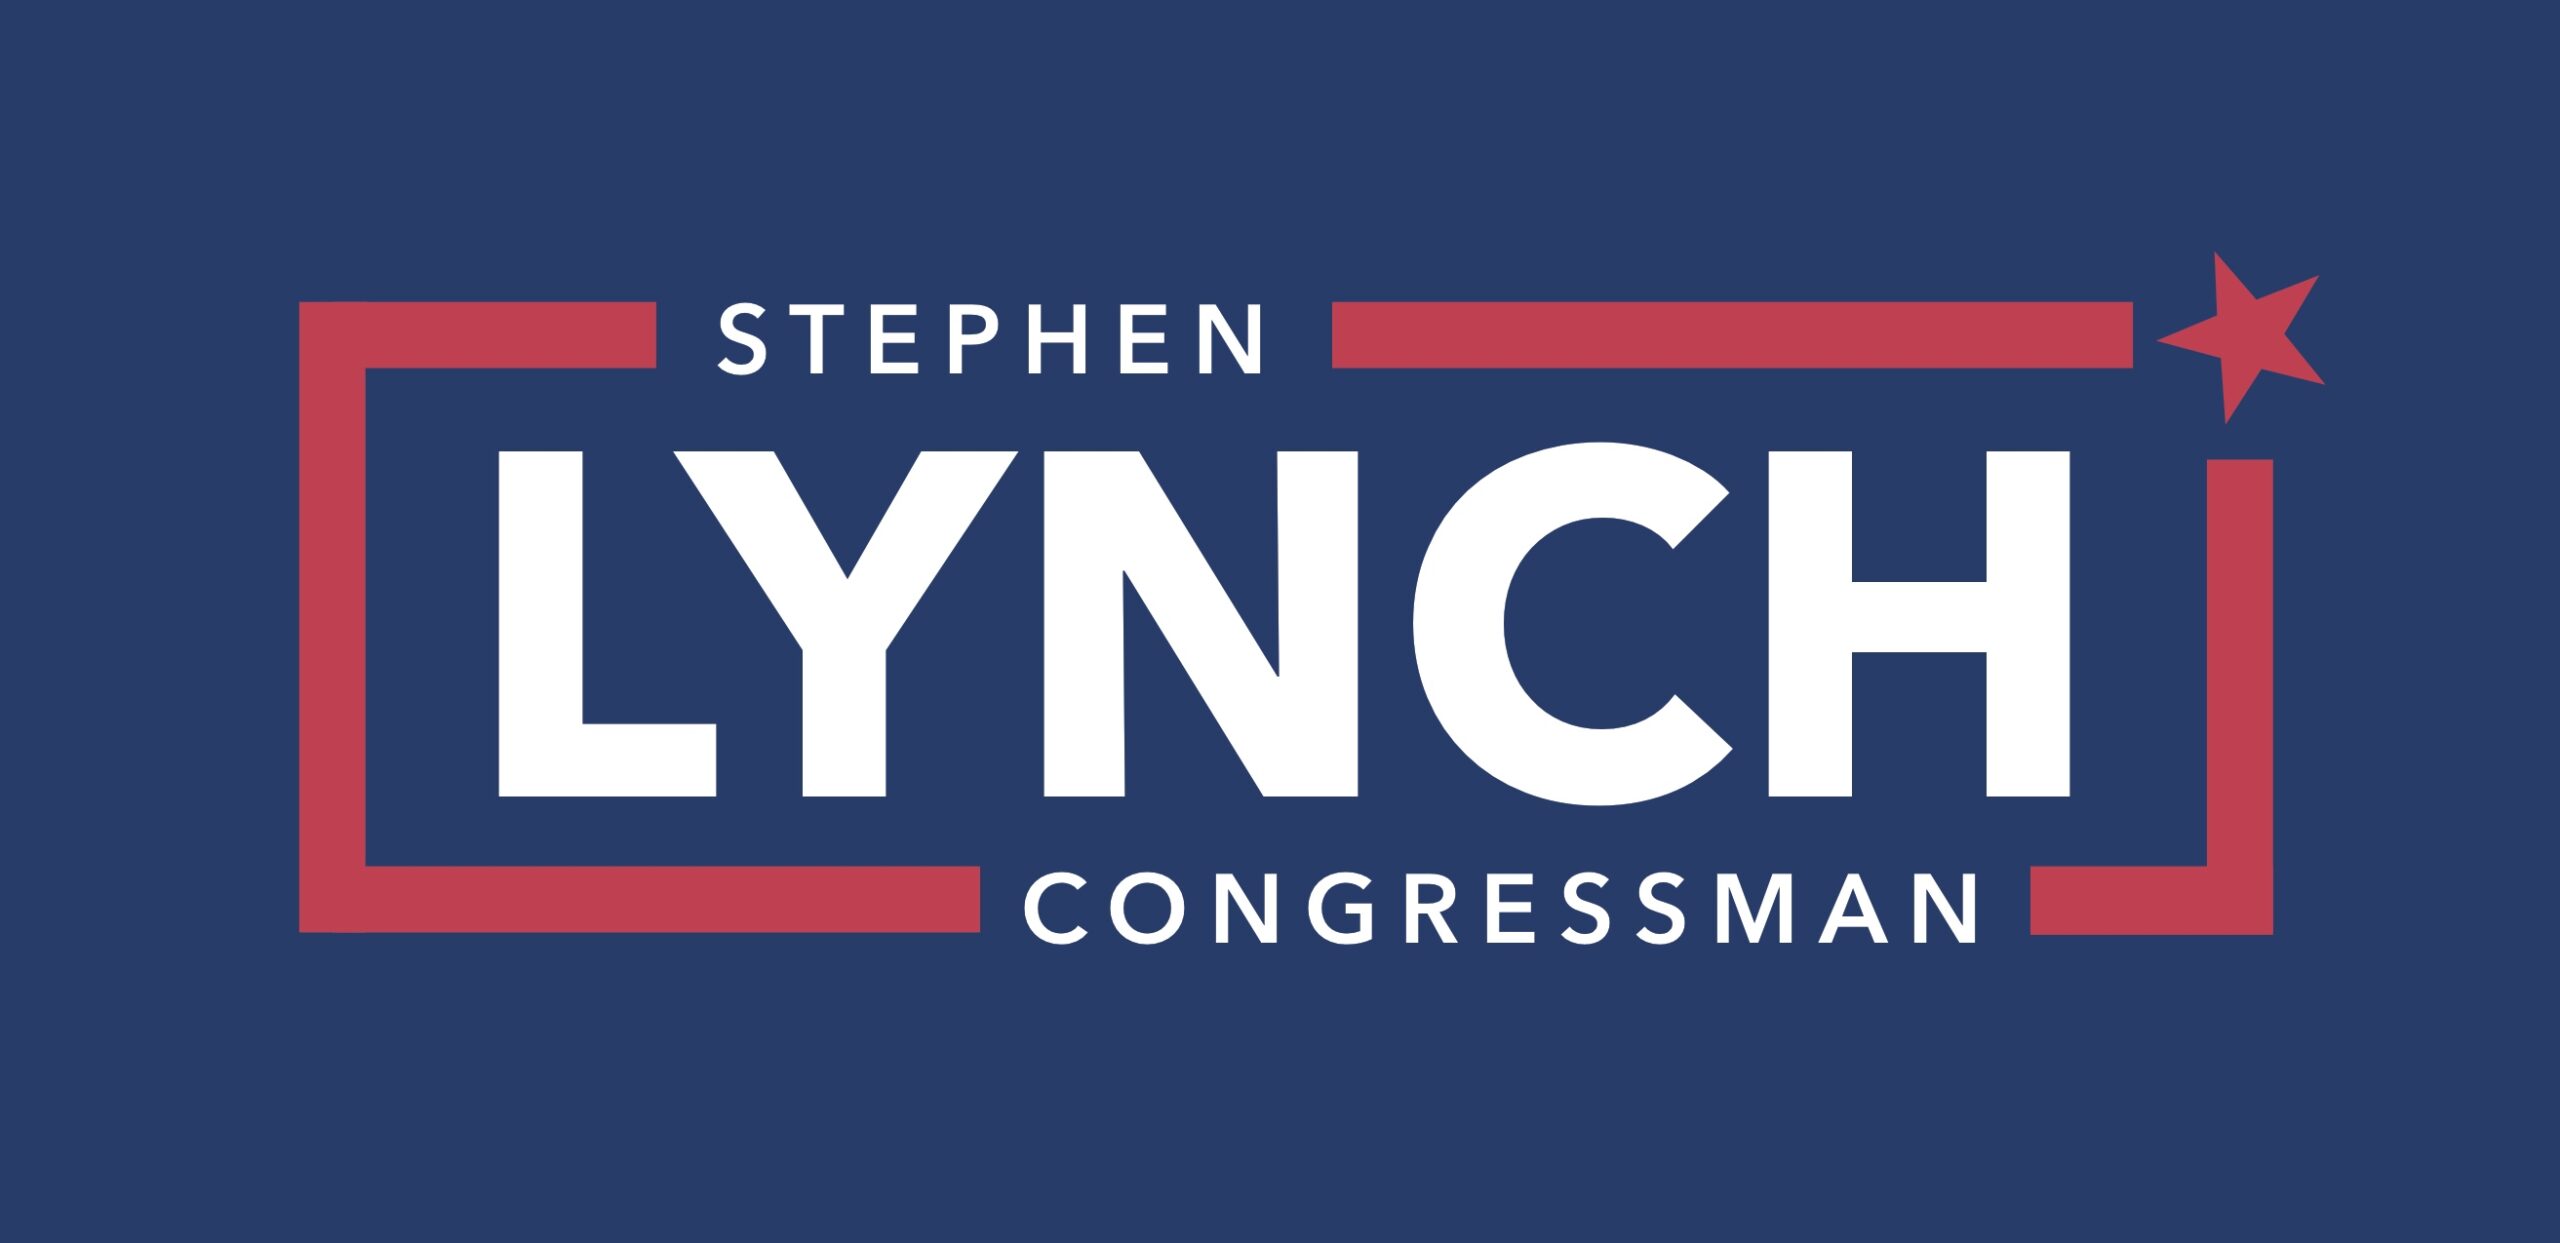 Stephen F Lynch